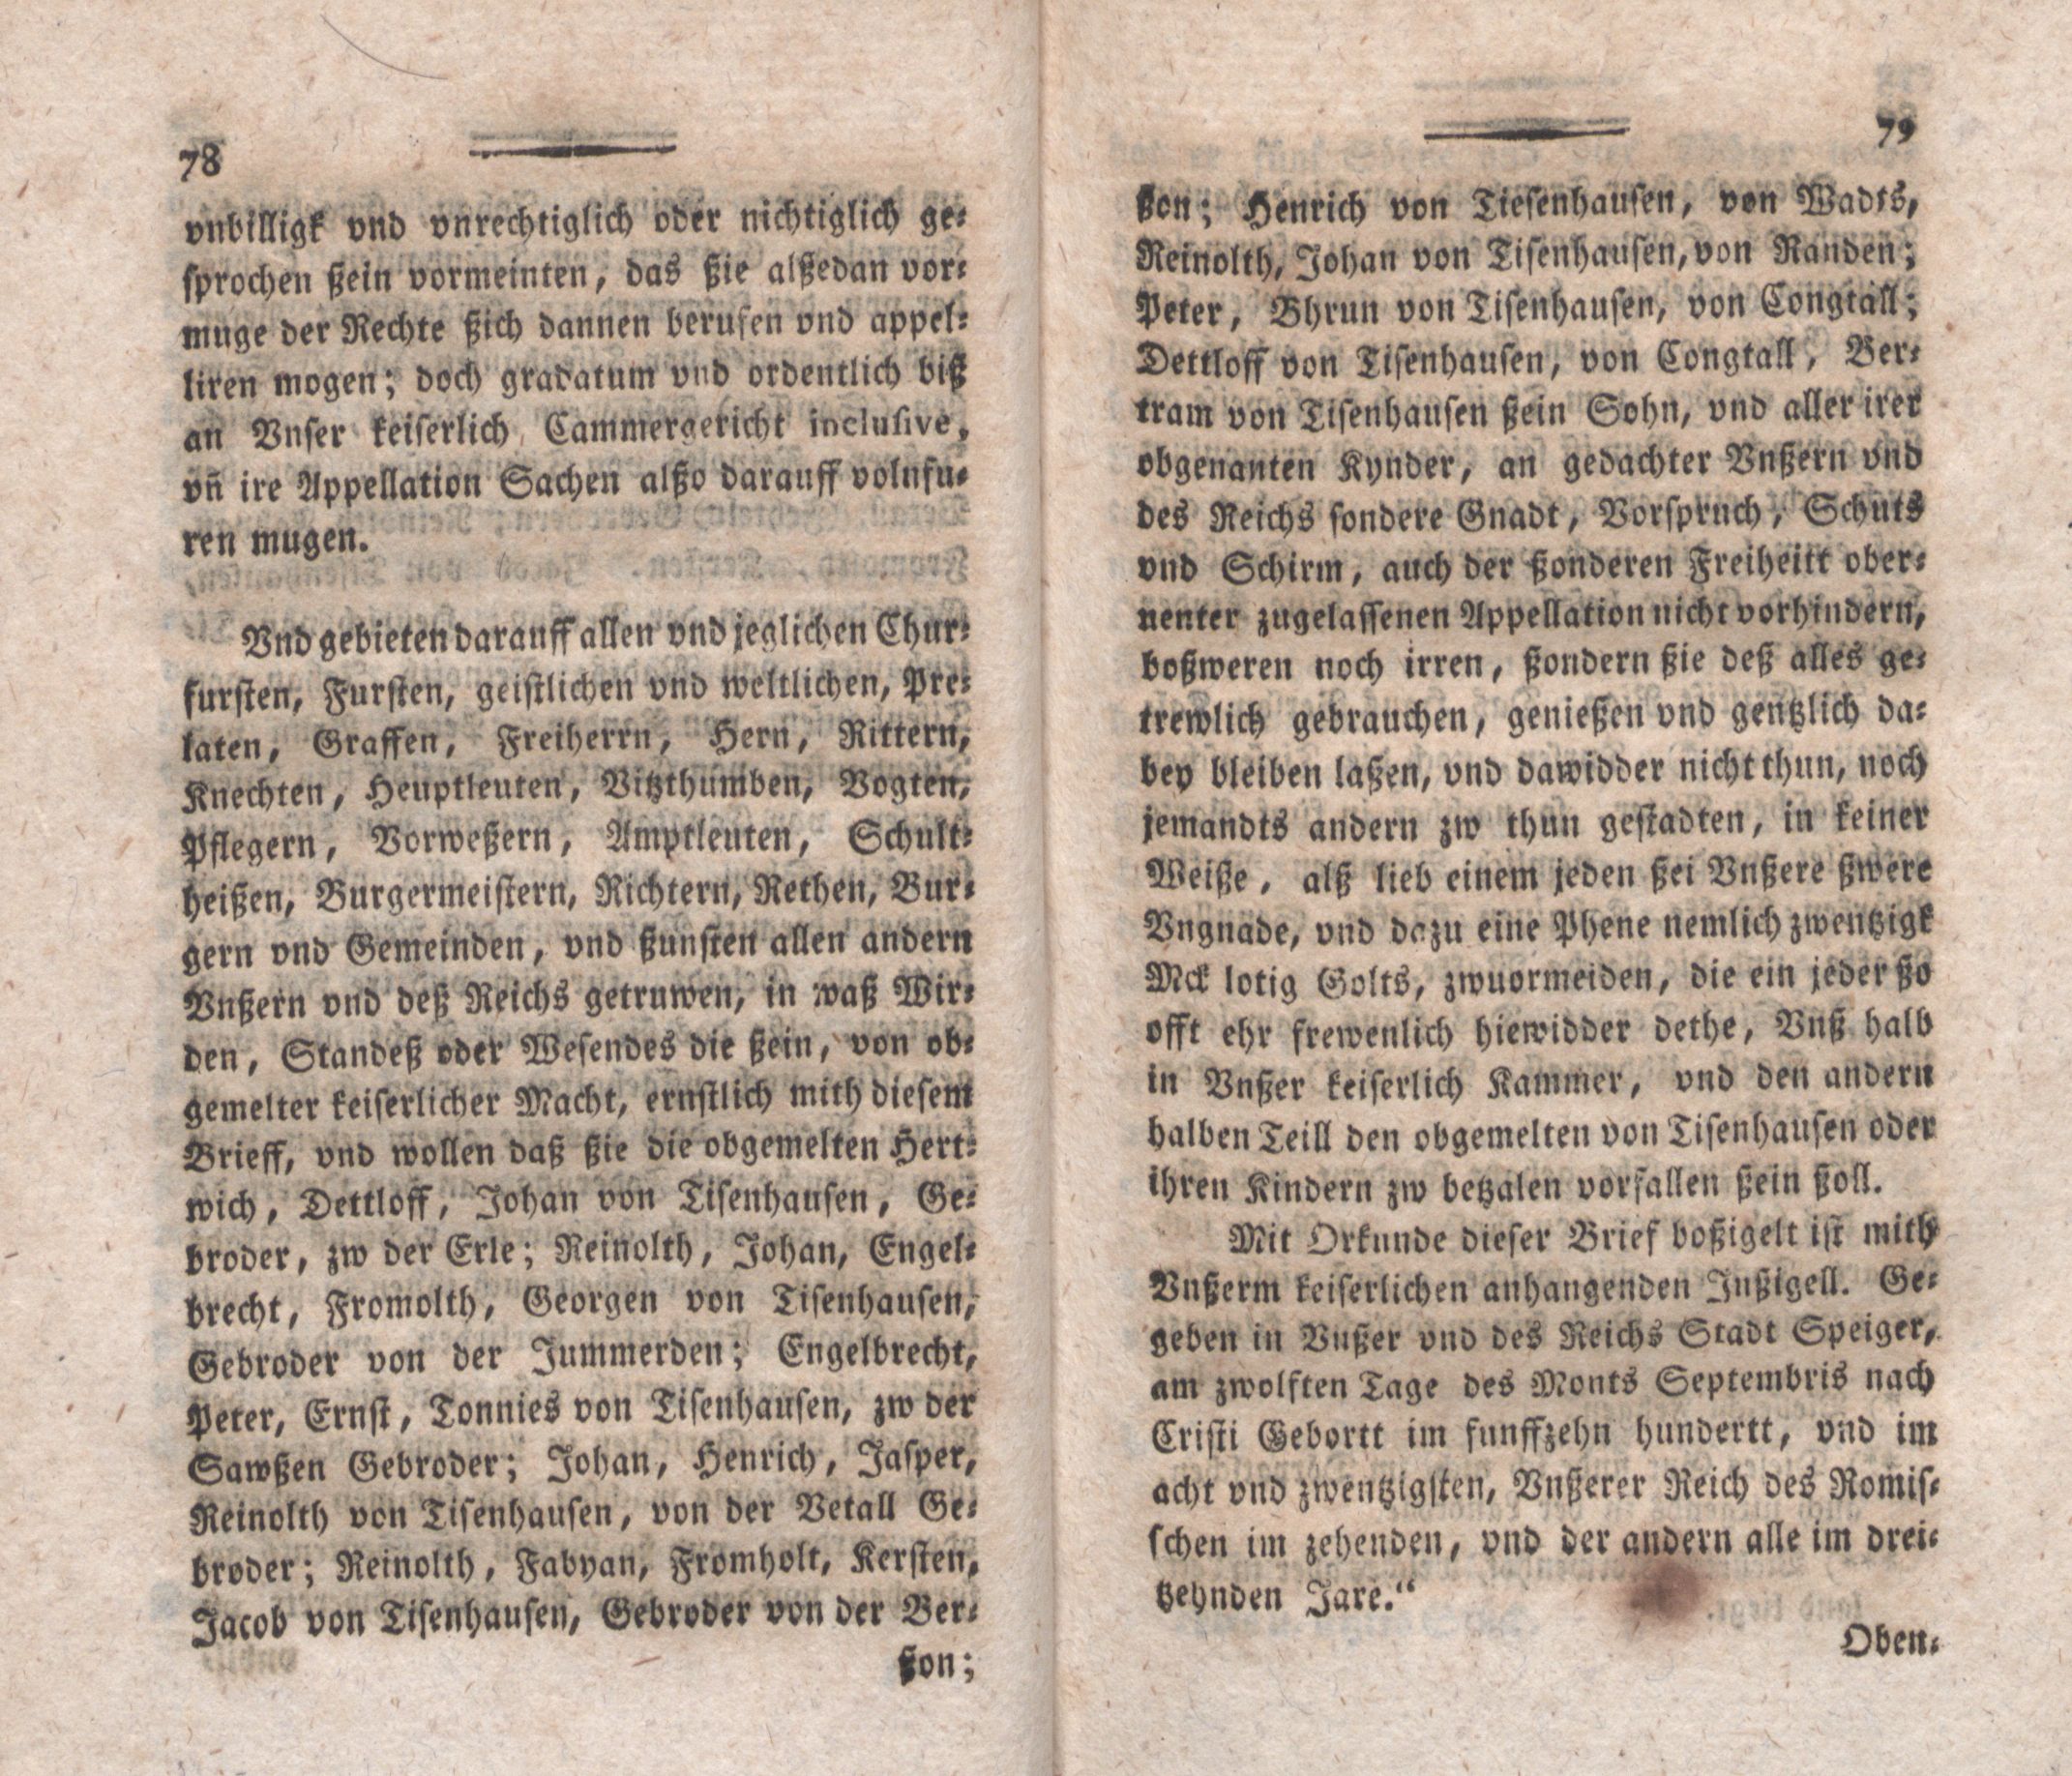 Neue nordische Miscellaneen [18] (1798) | 41. (78-79) Main body of text